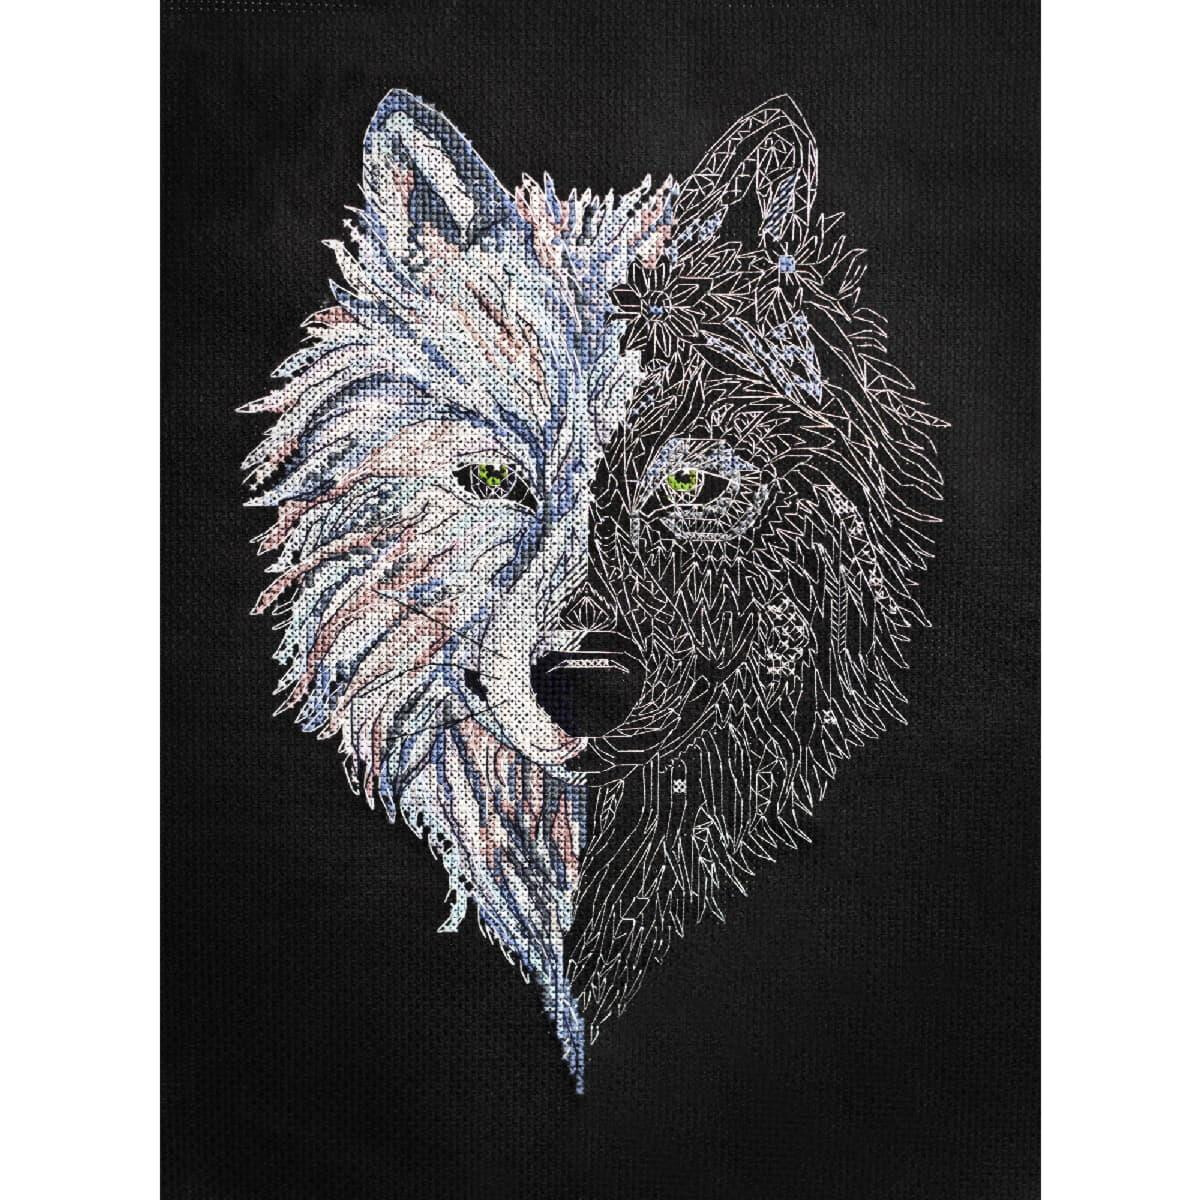 Abris Art telde Borduurpakket "Wolf", 18x25cm, DIY